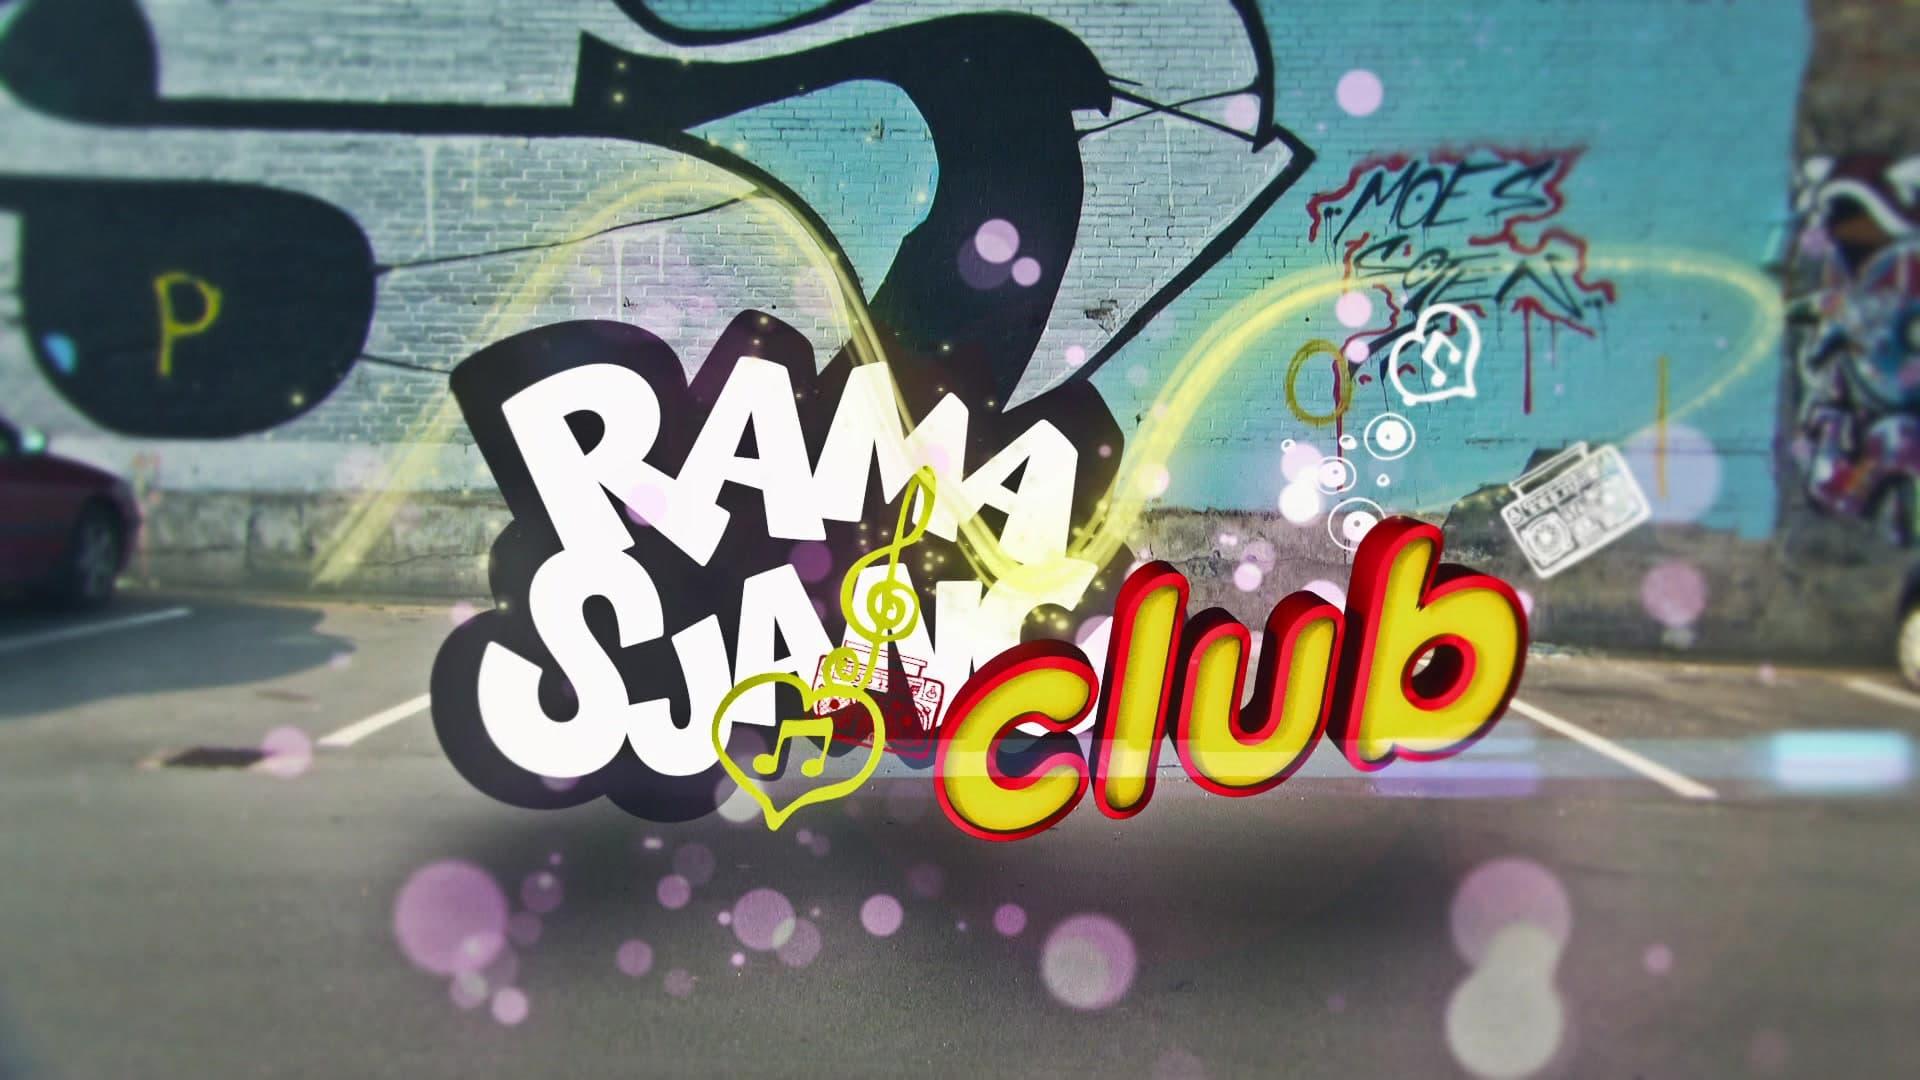 Ramasjang Club backdrop